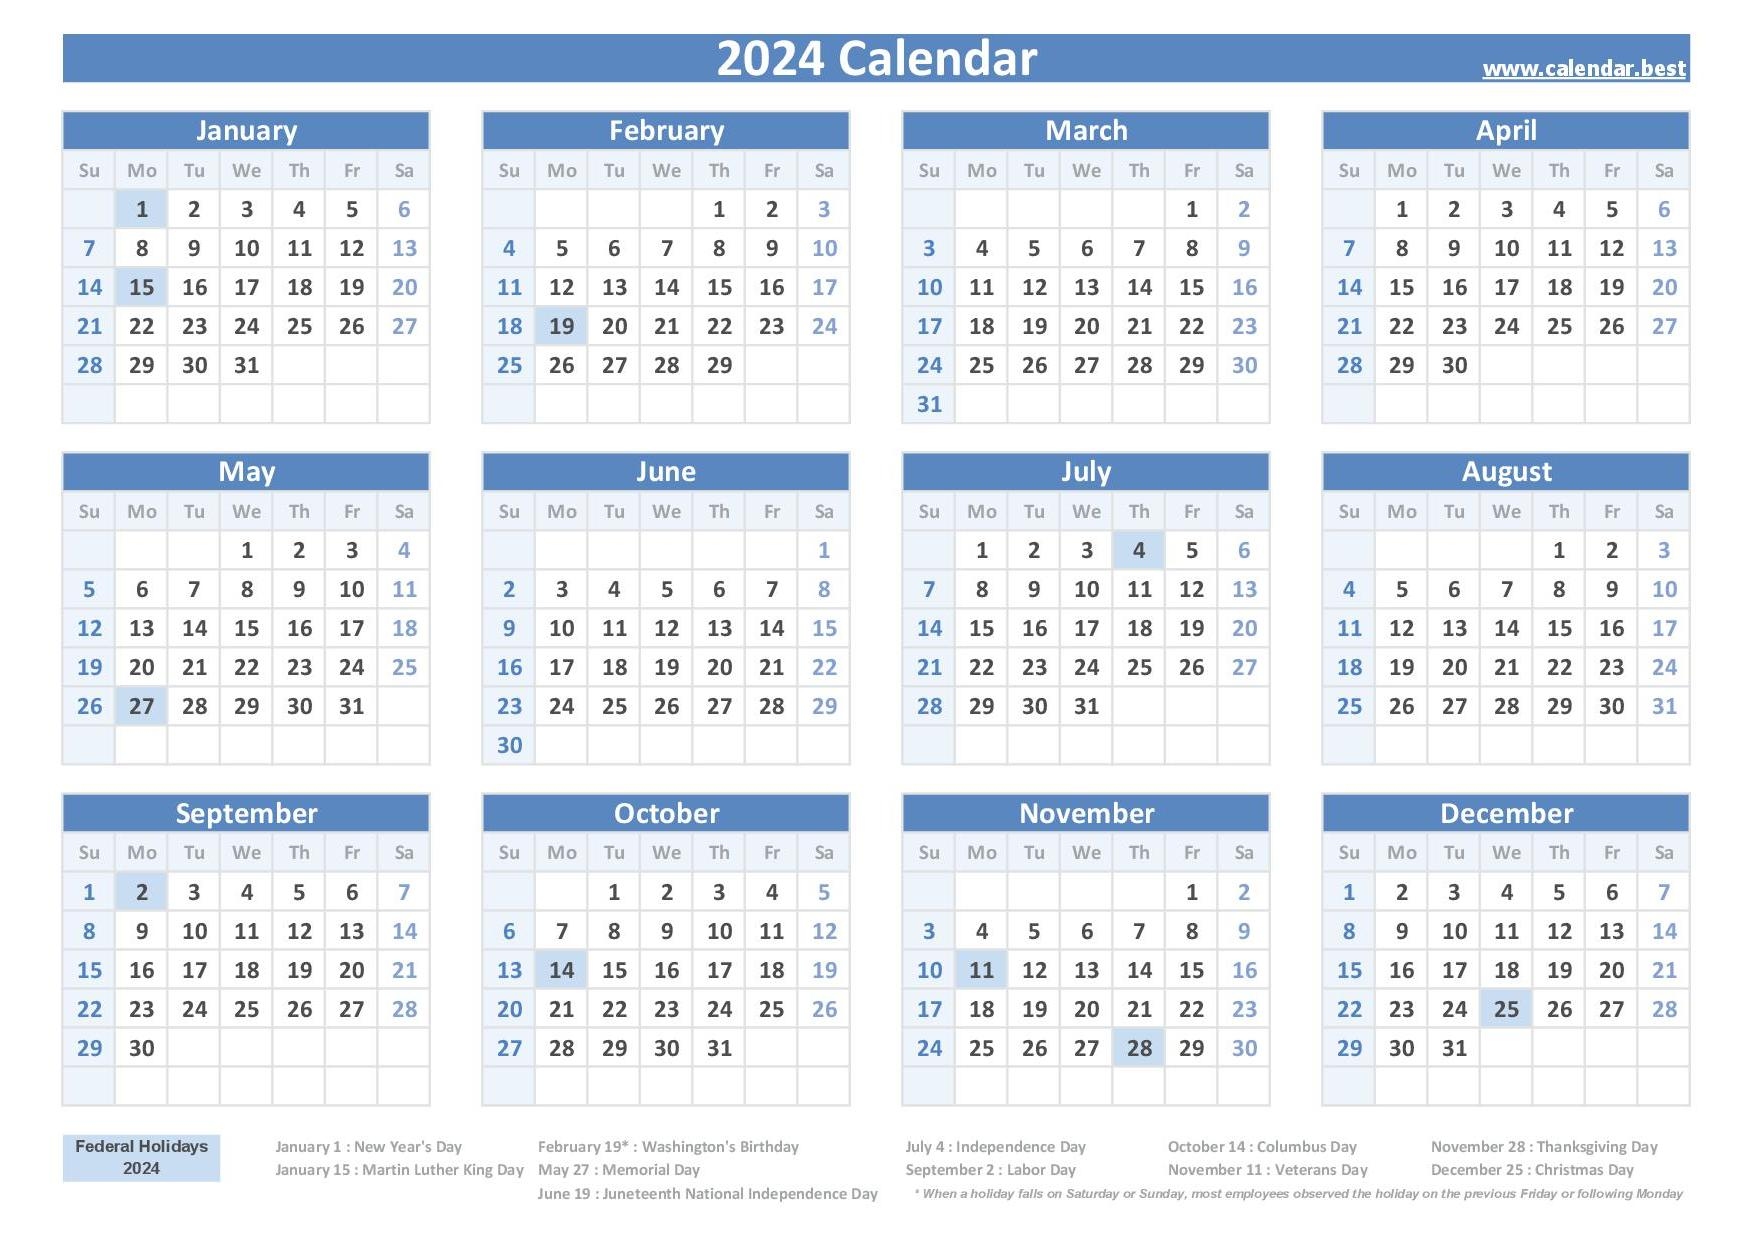 2024 Us Federal Holiday Calendar Printable Bill Marjie - Free Printable 2024 Calendar With Holidays 11x17